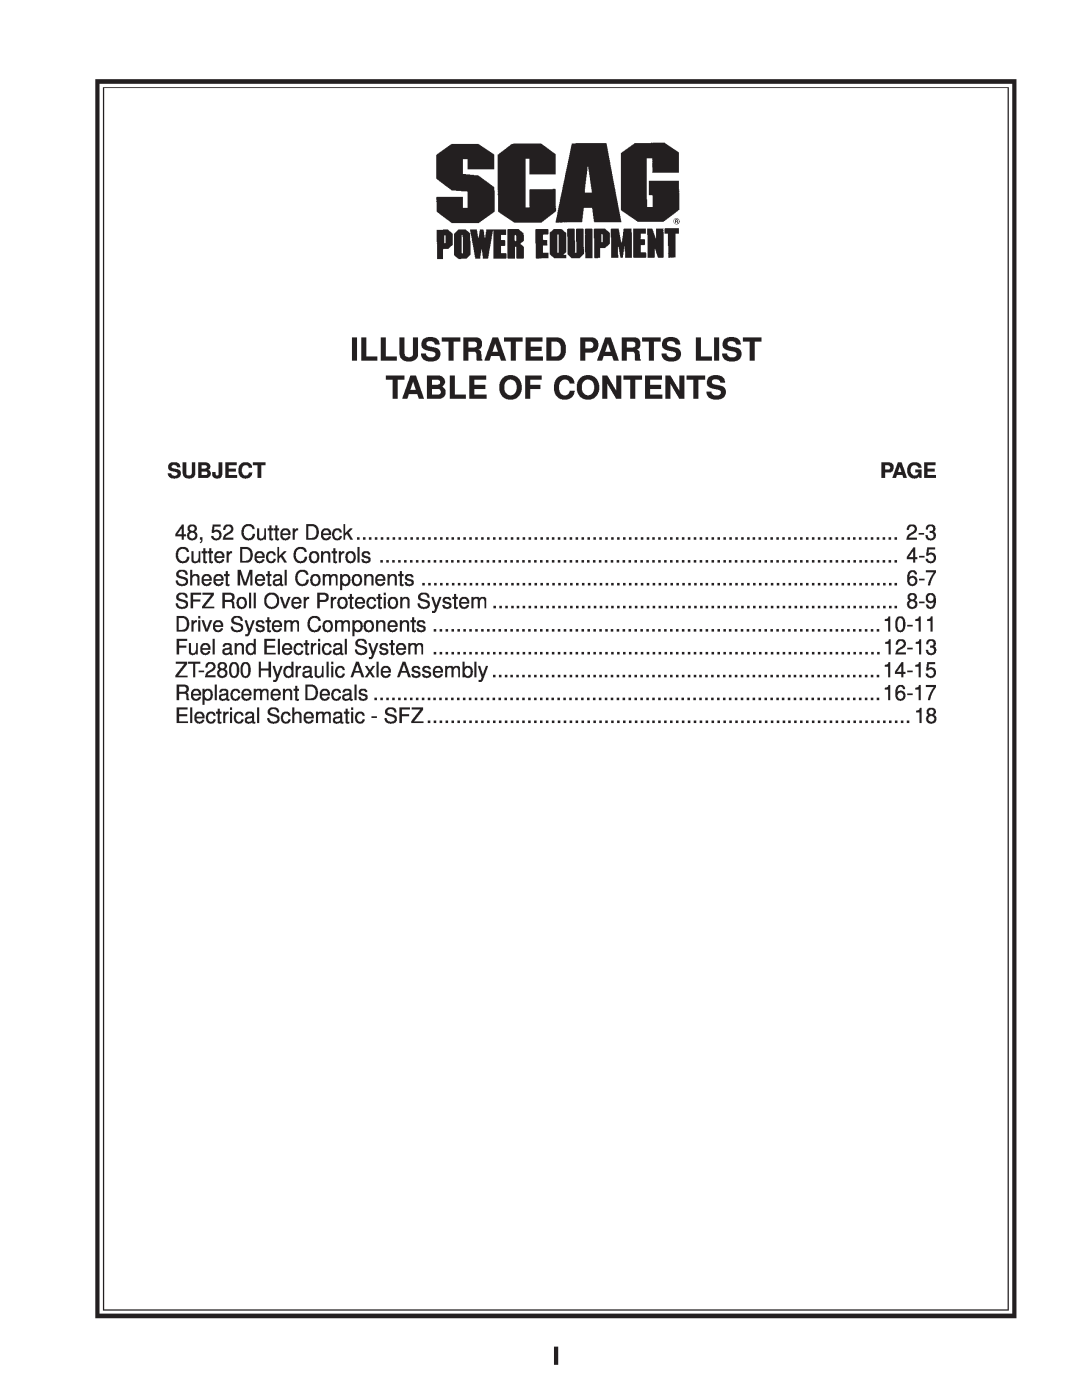 Scag Power Equipment SFZ52-19KA, SFZ52-26BS, sfz48-26bs, SMFZ-52, SMFZ-48 Illustrated Parts List Table Of Contents, Subject 